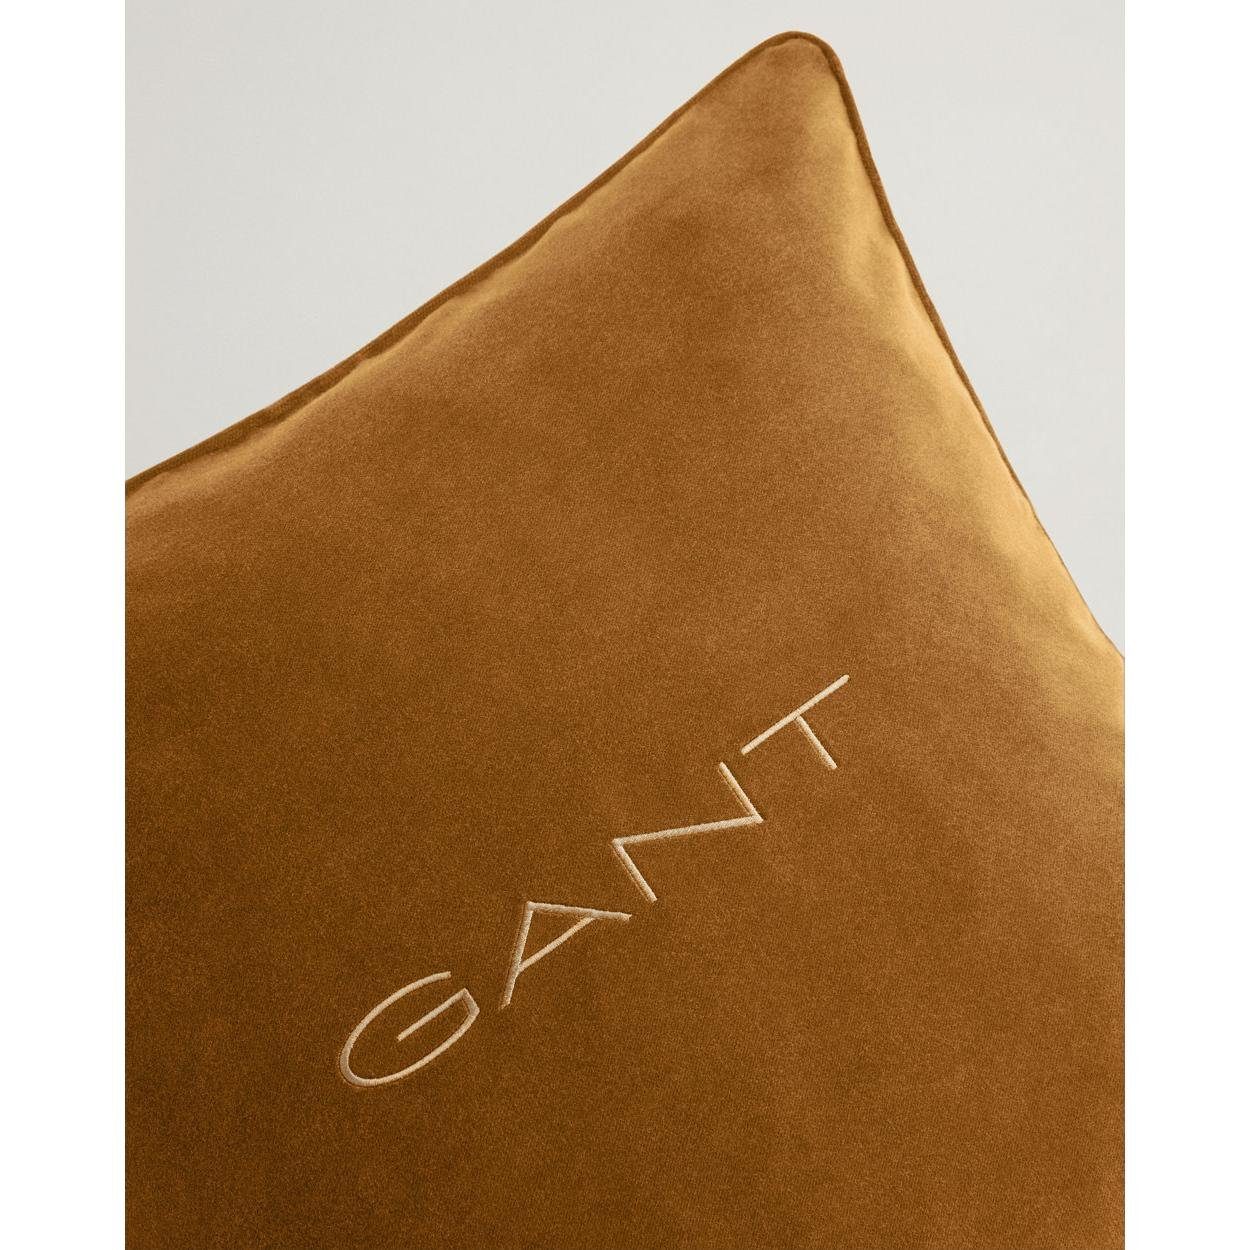 Dark Cushion Yellow Gant Samt Kissenhülle Kissenhülle Velvet Gant Home (50x50cm, Mustard